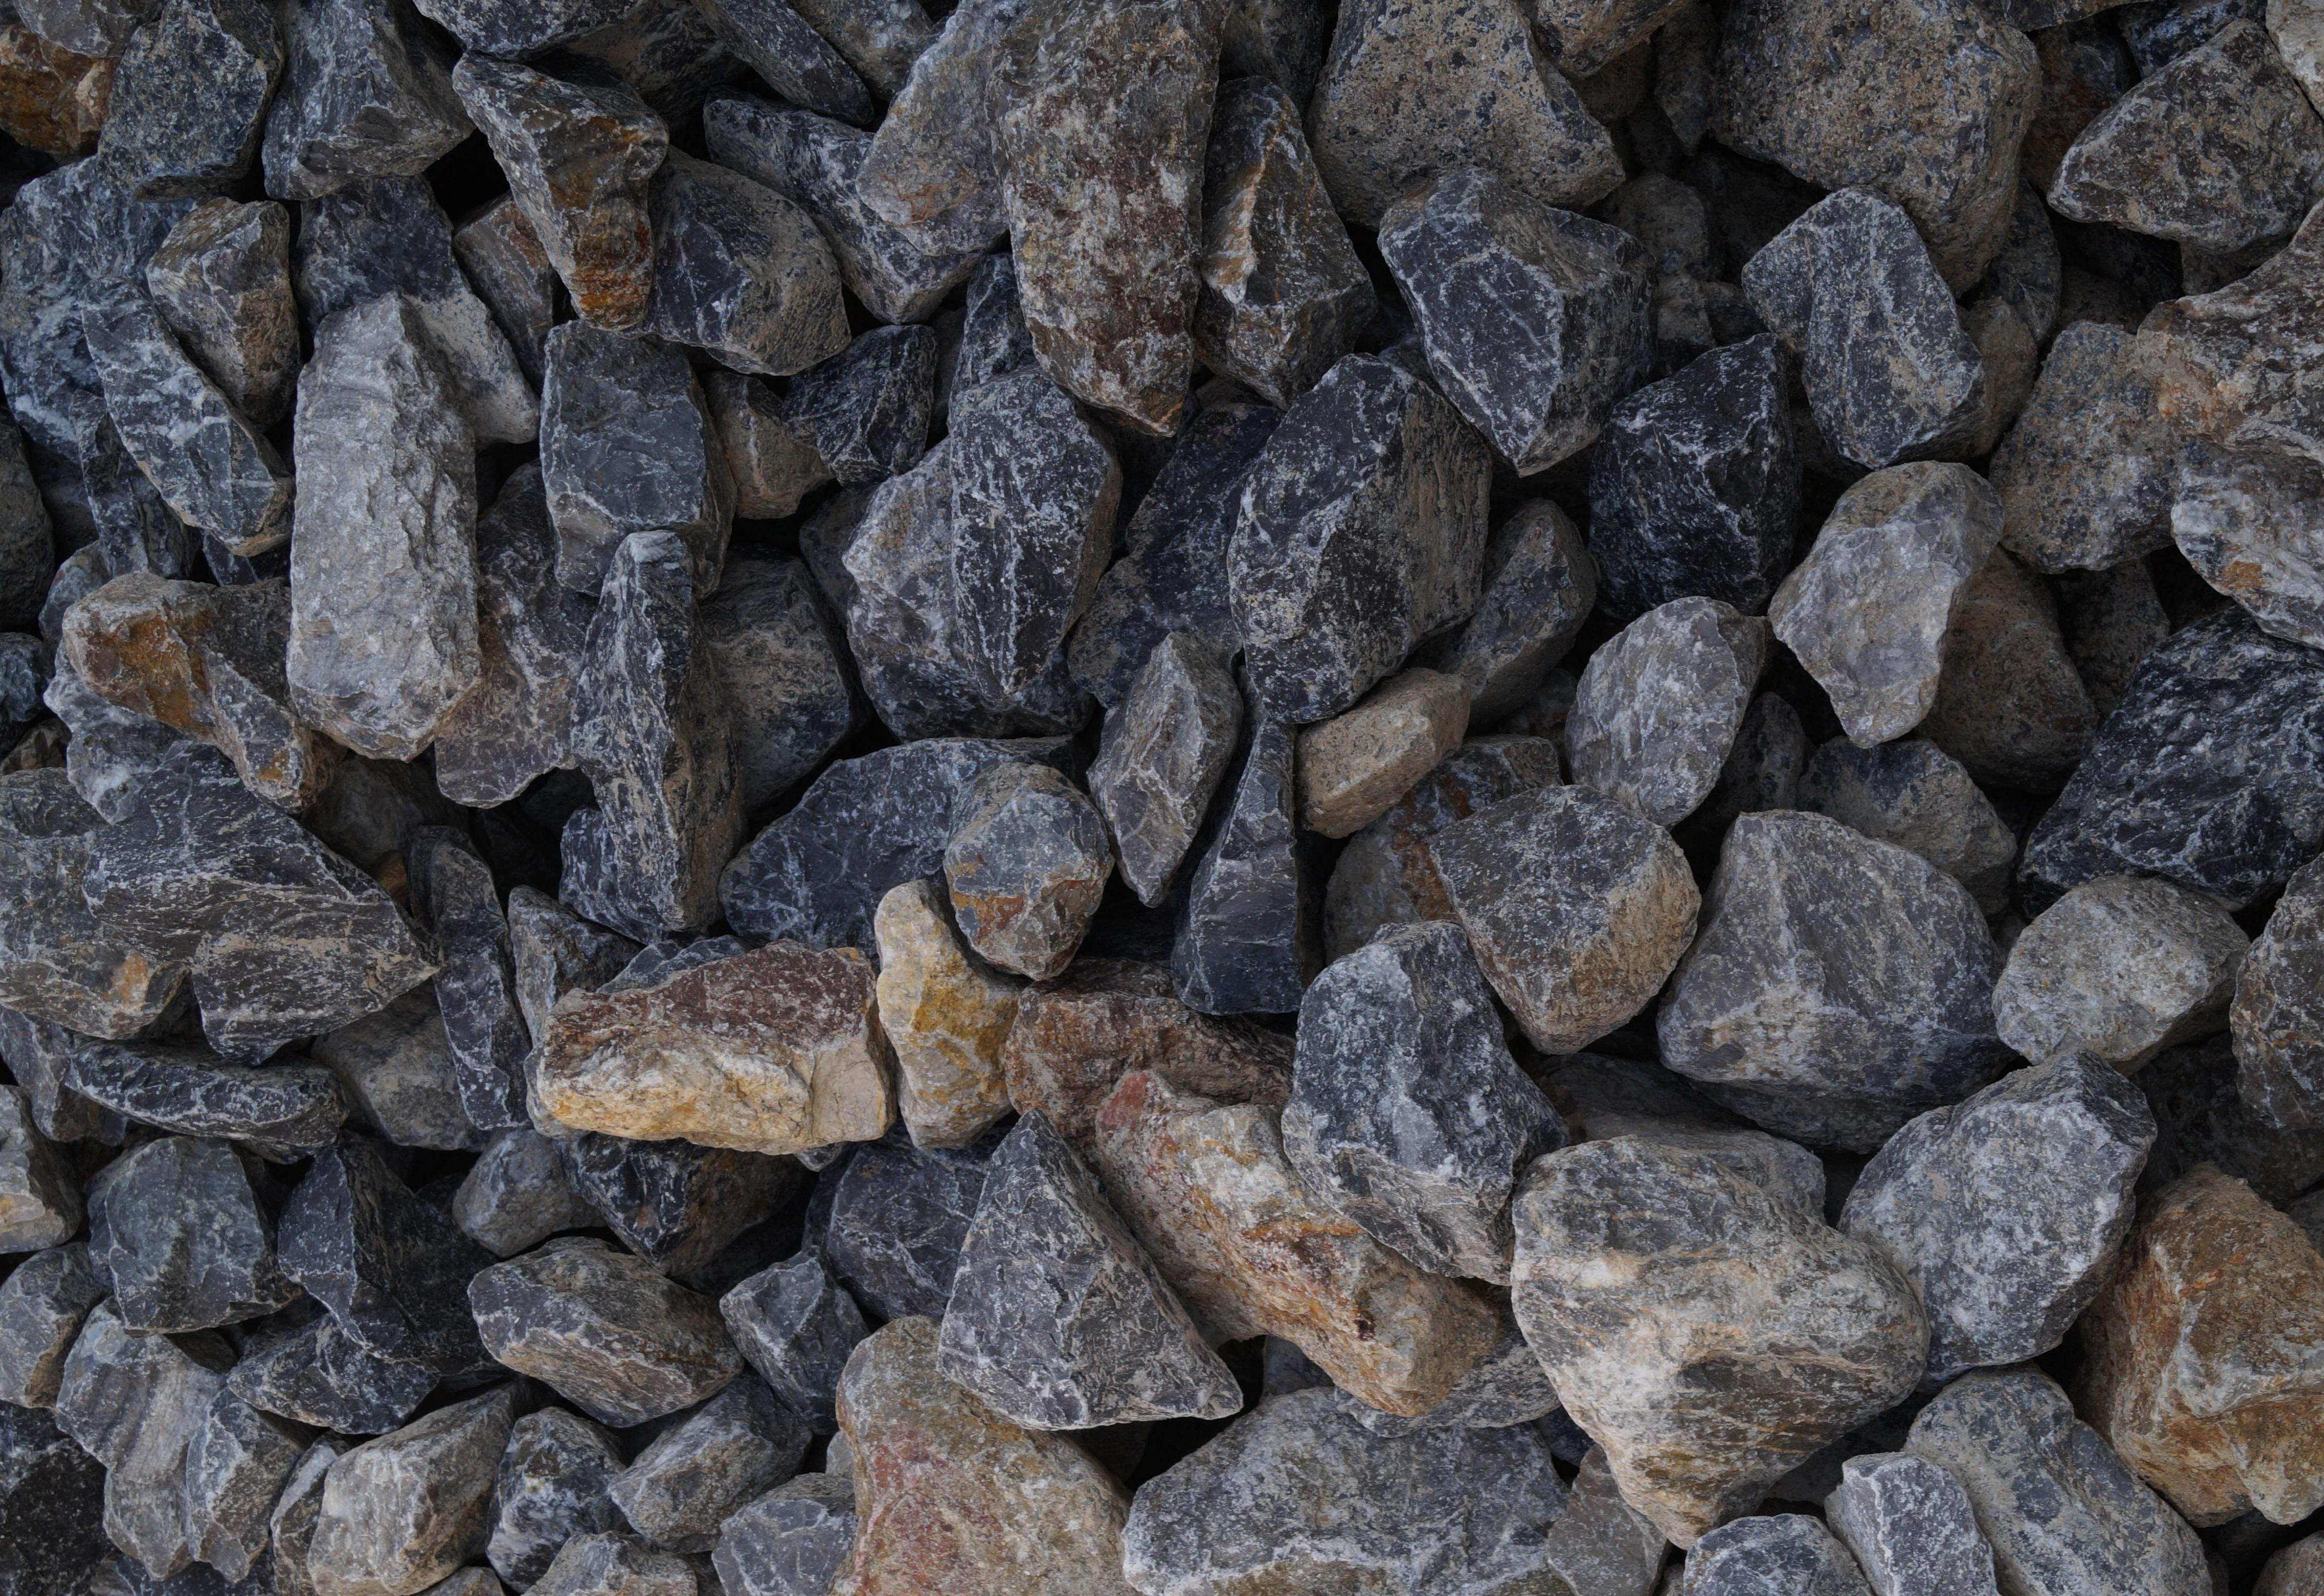 Limestone 80 to 150 mm